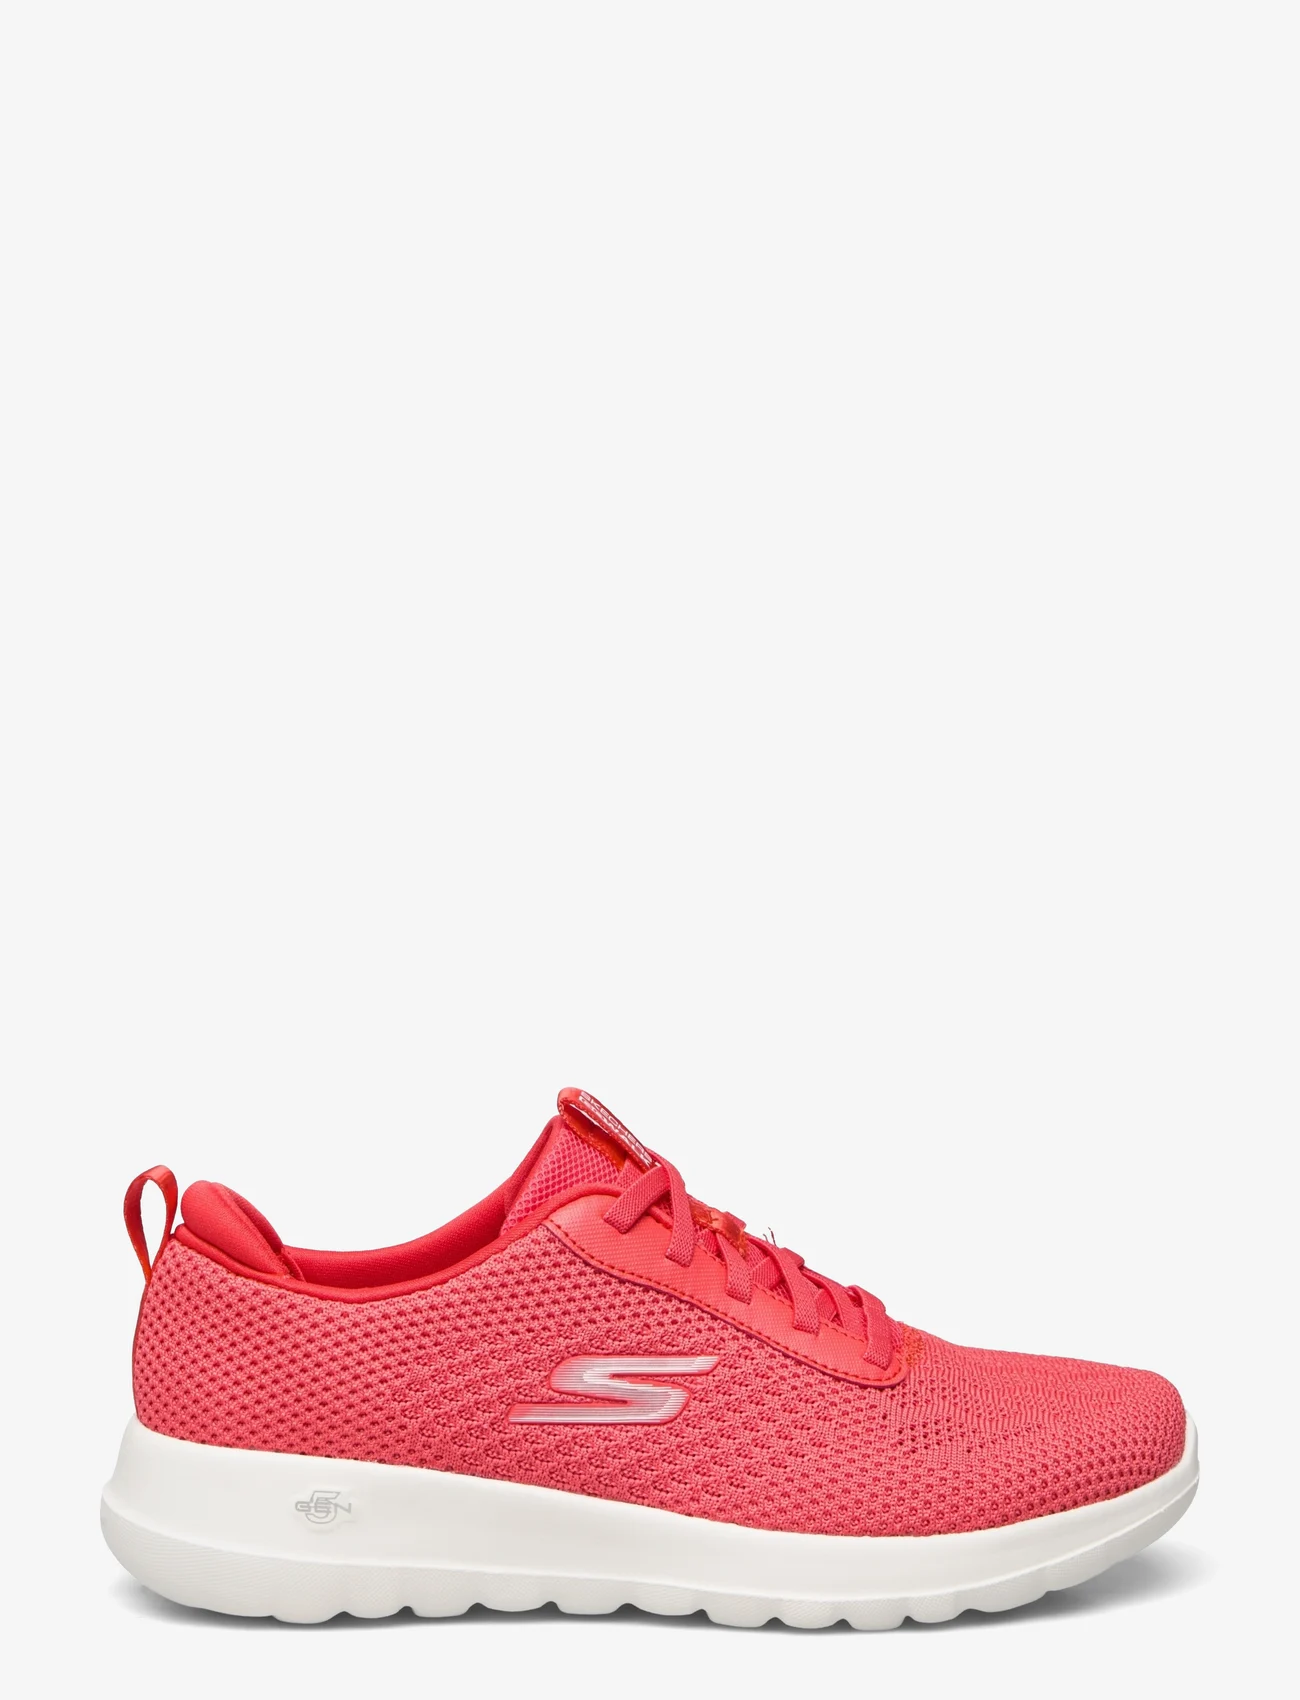 Skechers - Womens Go Walk Joy - Wonderful Spring - låga sneakers - red red - 1